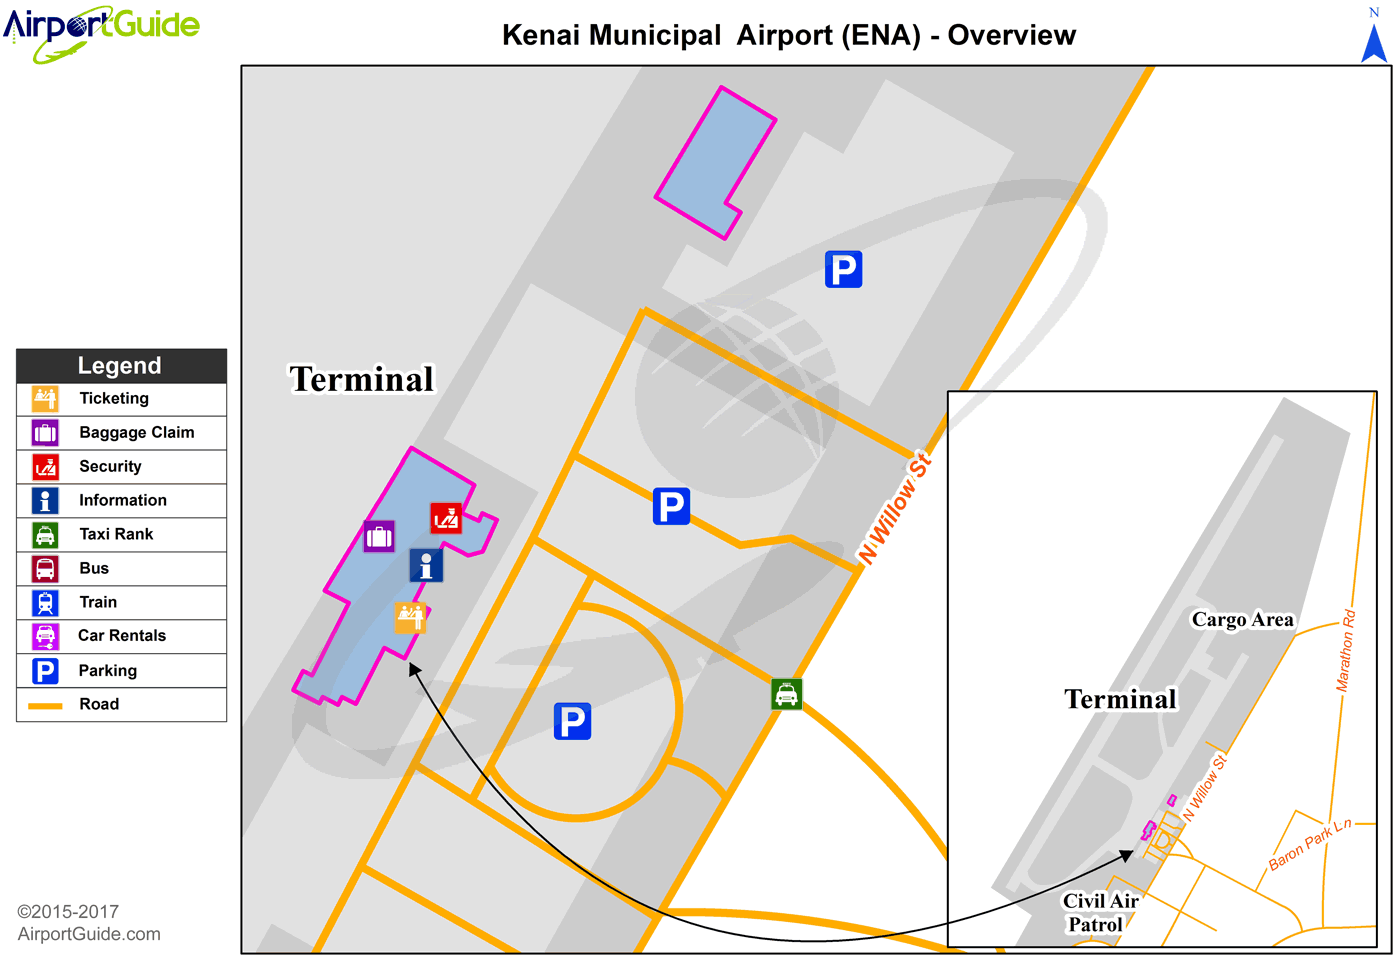 Kenai - Kenai Municipal (ENA) Airport Terminal Map - Overview